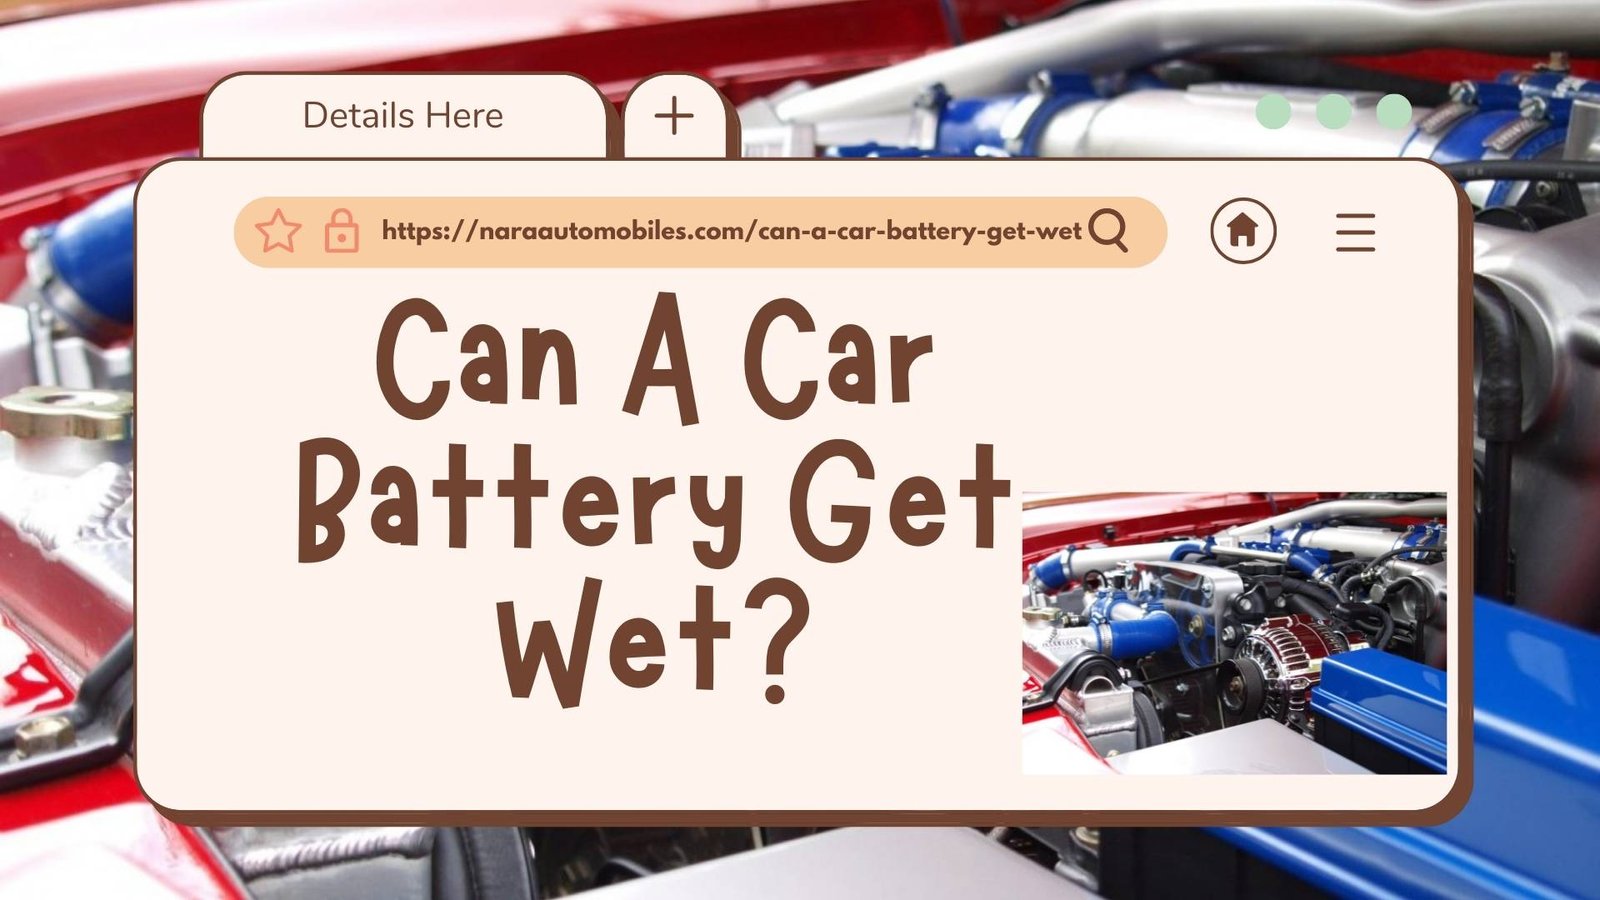 Can a car battery get wet